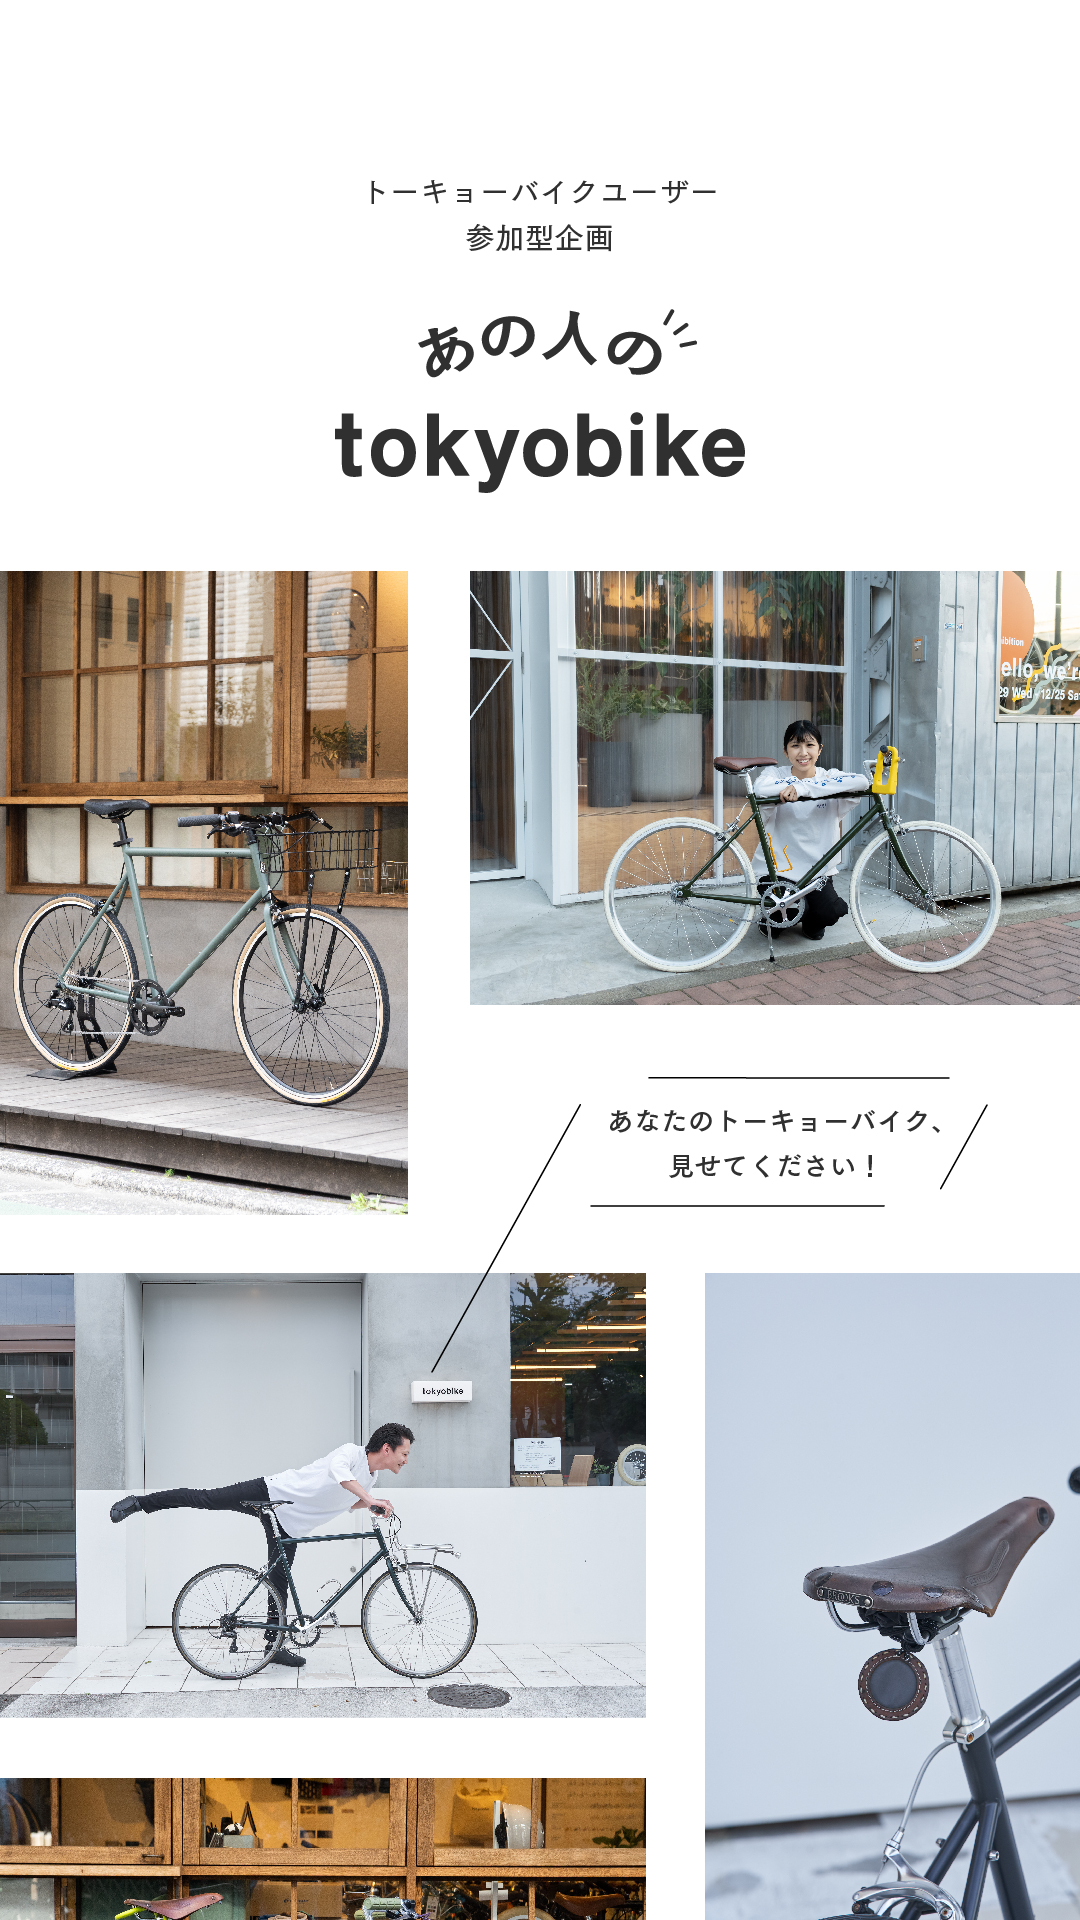 tokyobike (@tokyobike) / Twitter